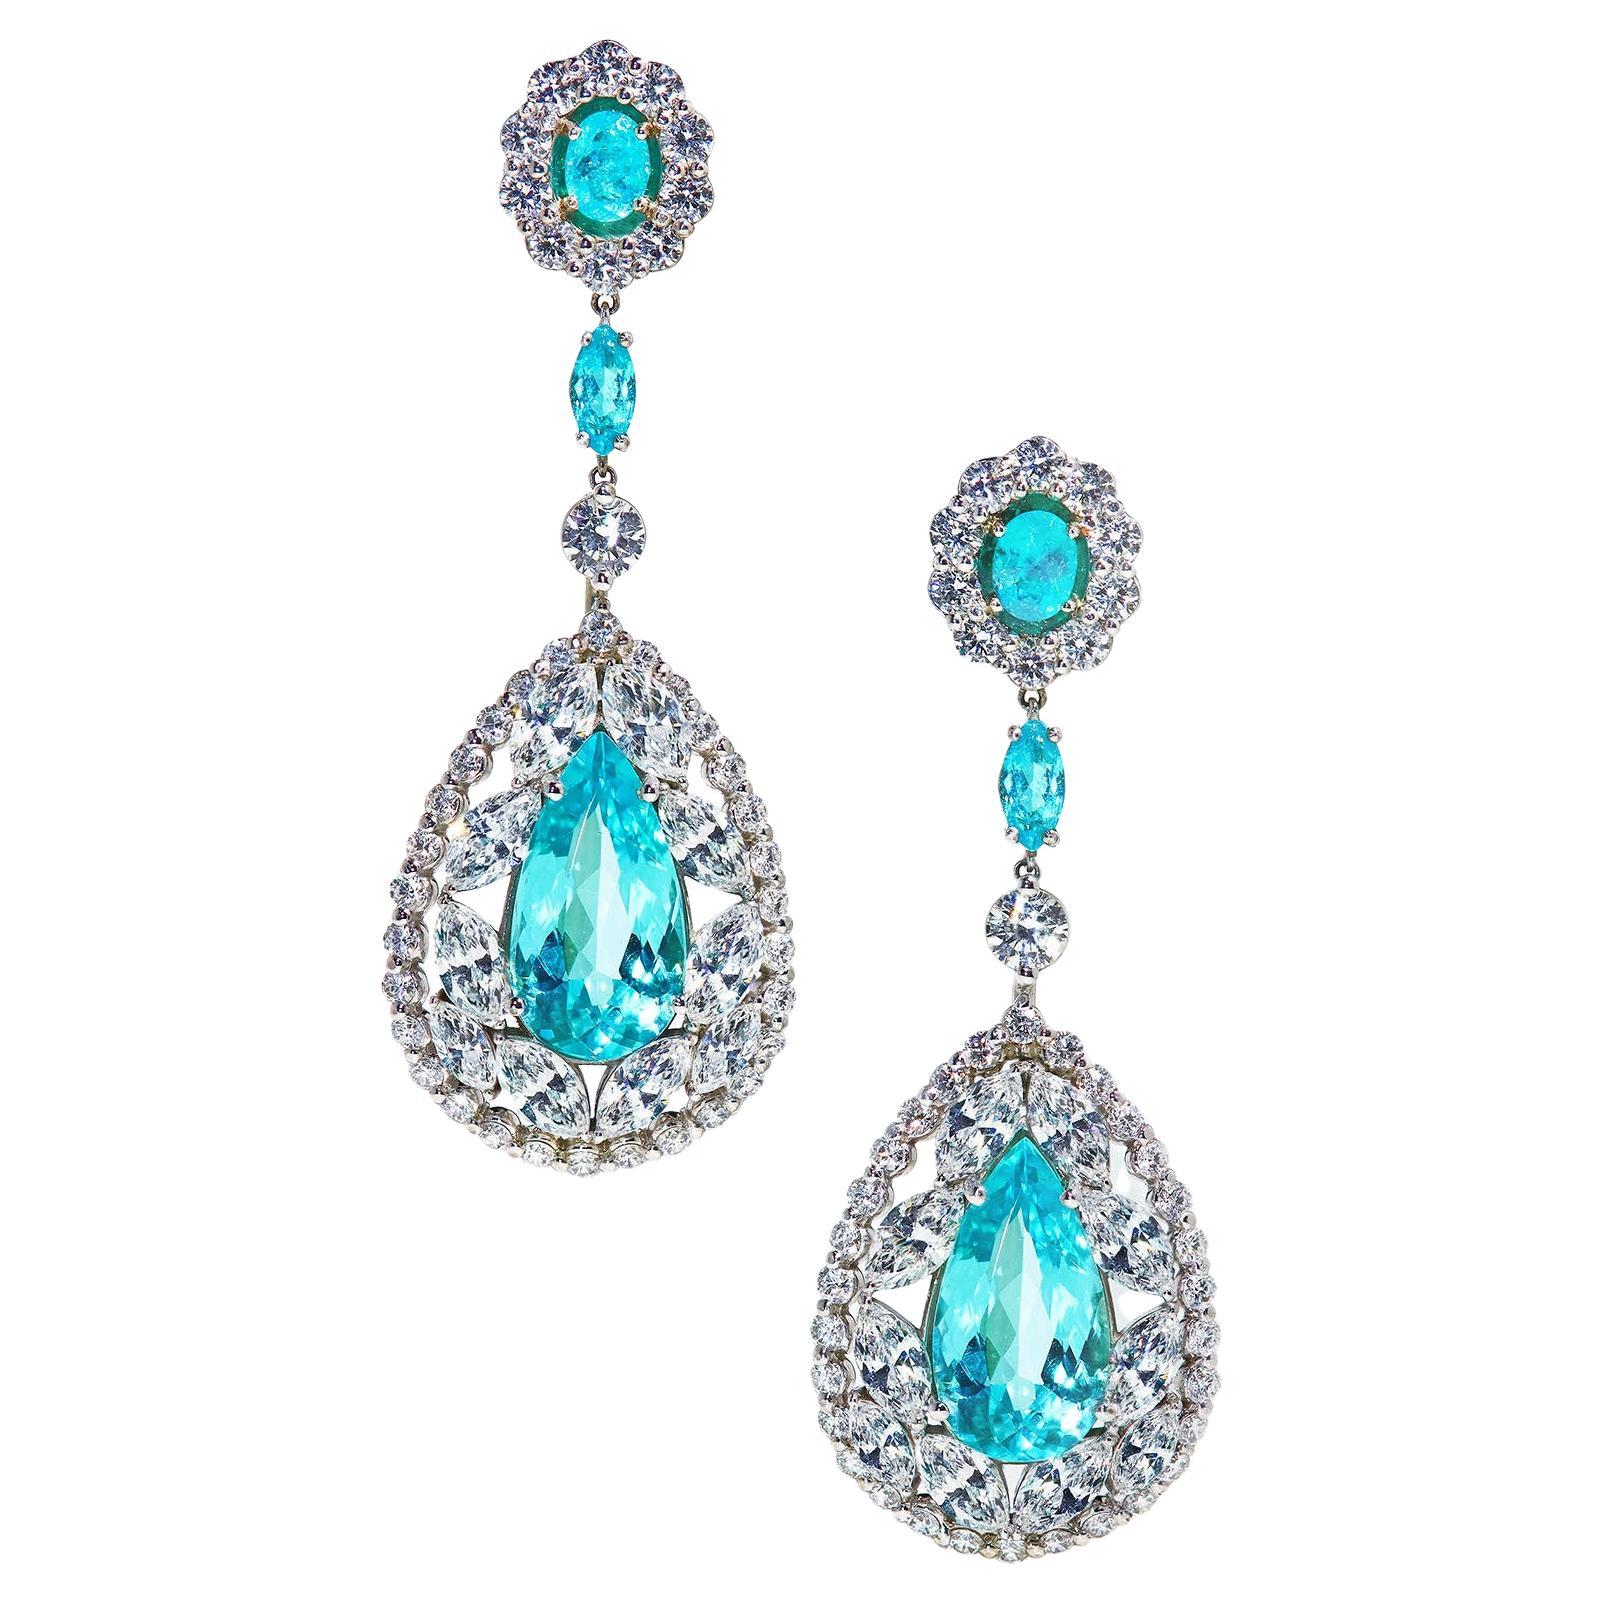 Robert Pelliccia 4.25ctw Paraiba Tourmaline and 3.63ctw Diamond Drop Earrings For Sale